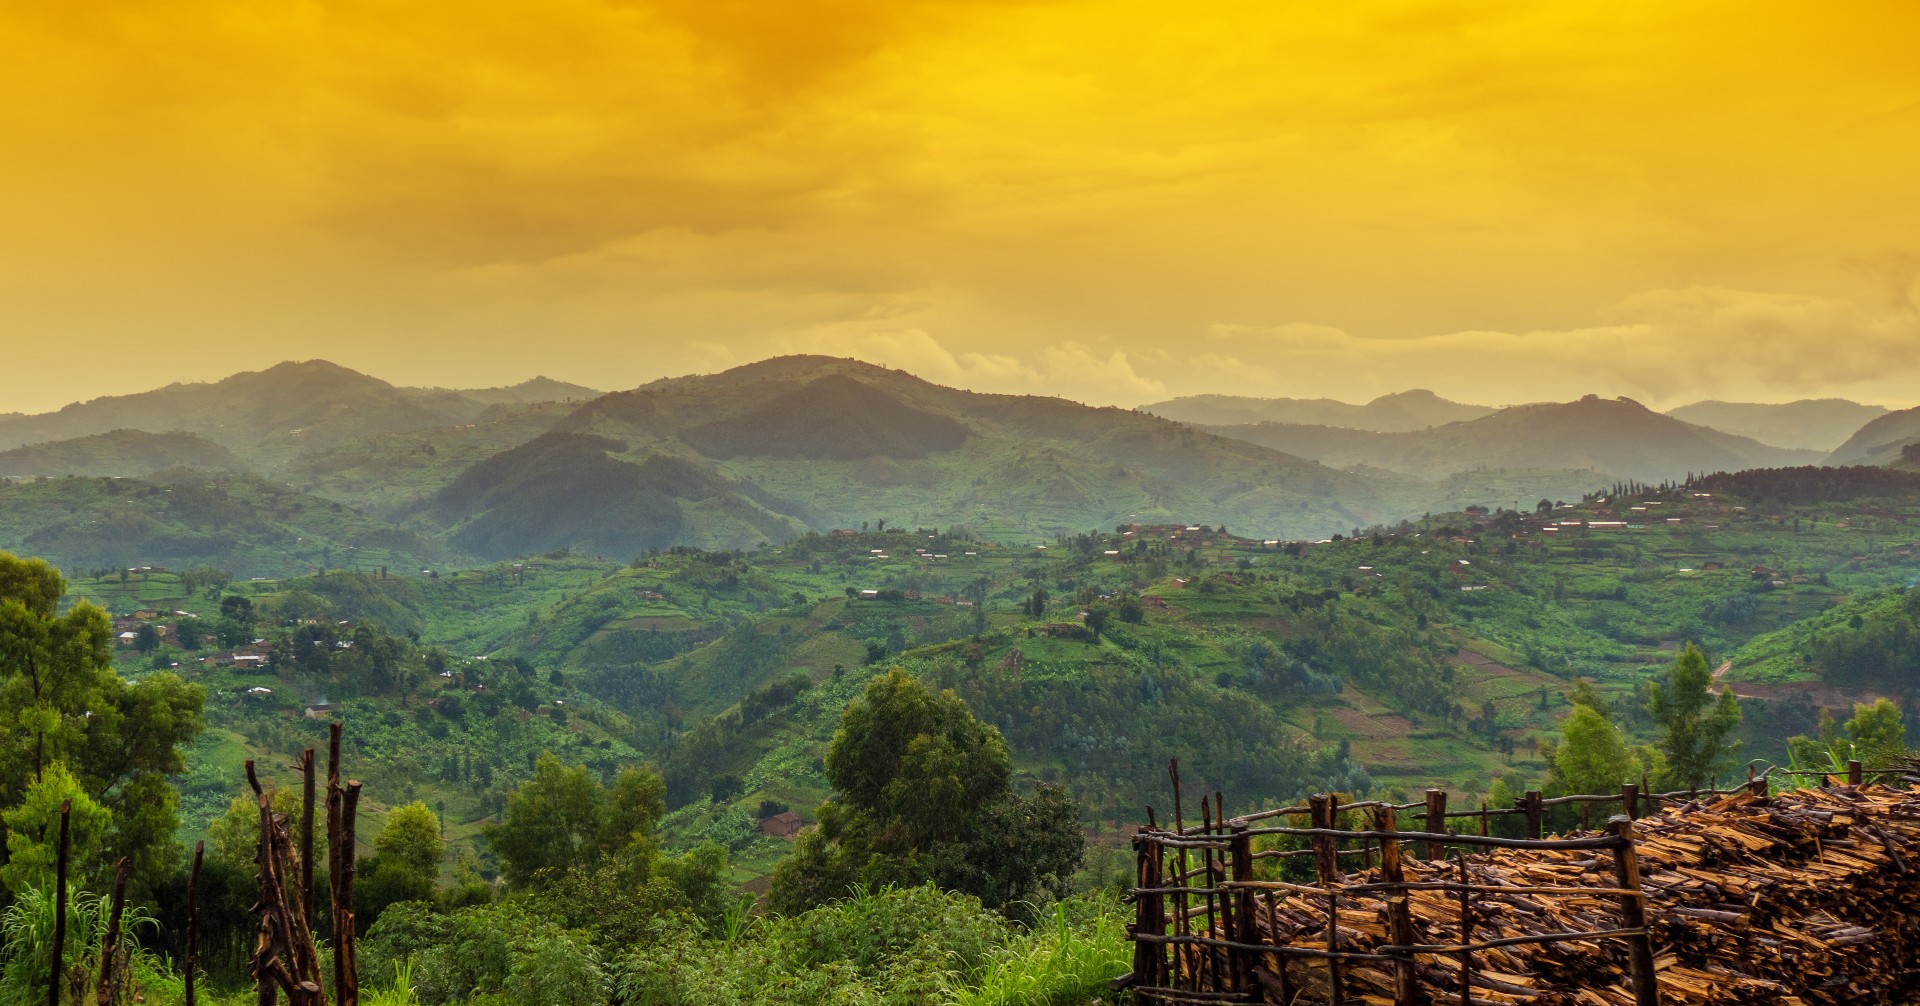 A photo of mountains in Rwanda